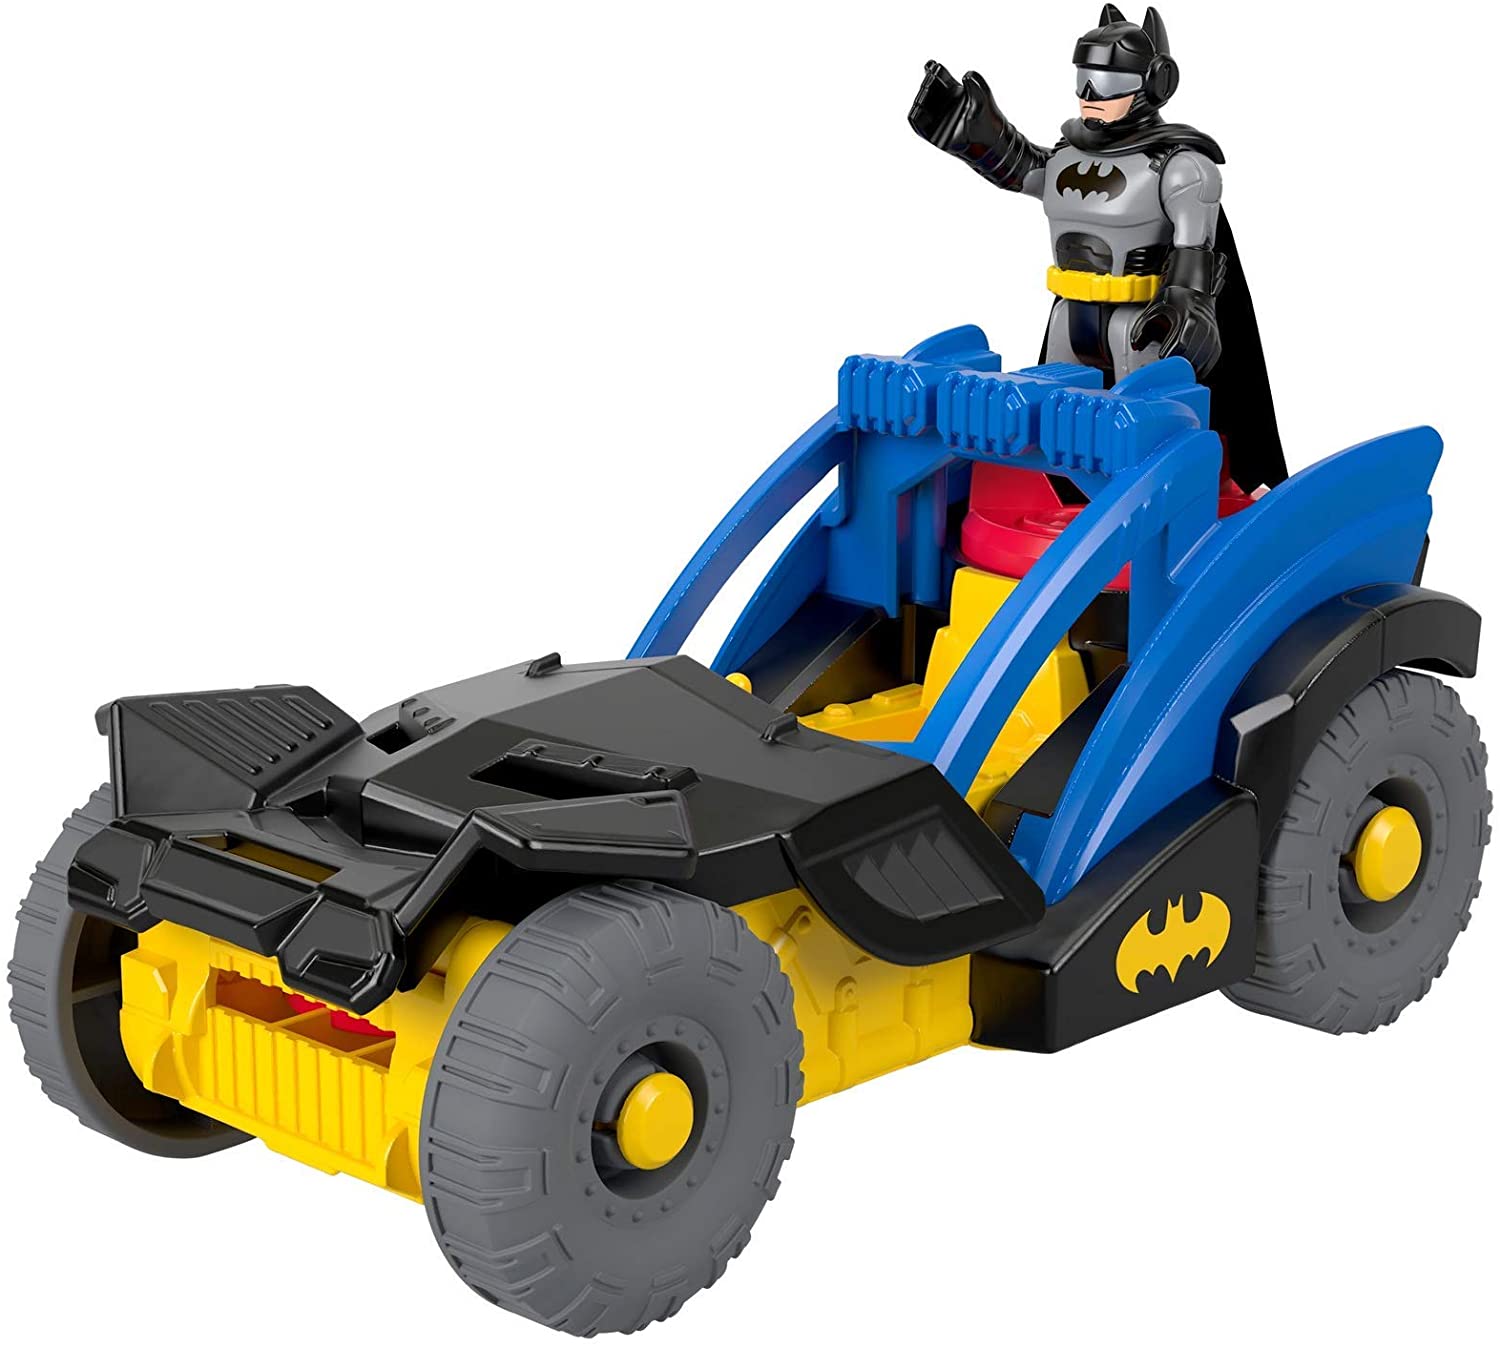 Boneco Batman & Buggy DC Super Friends Imaginext - Mattel